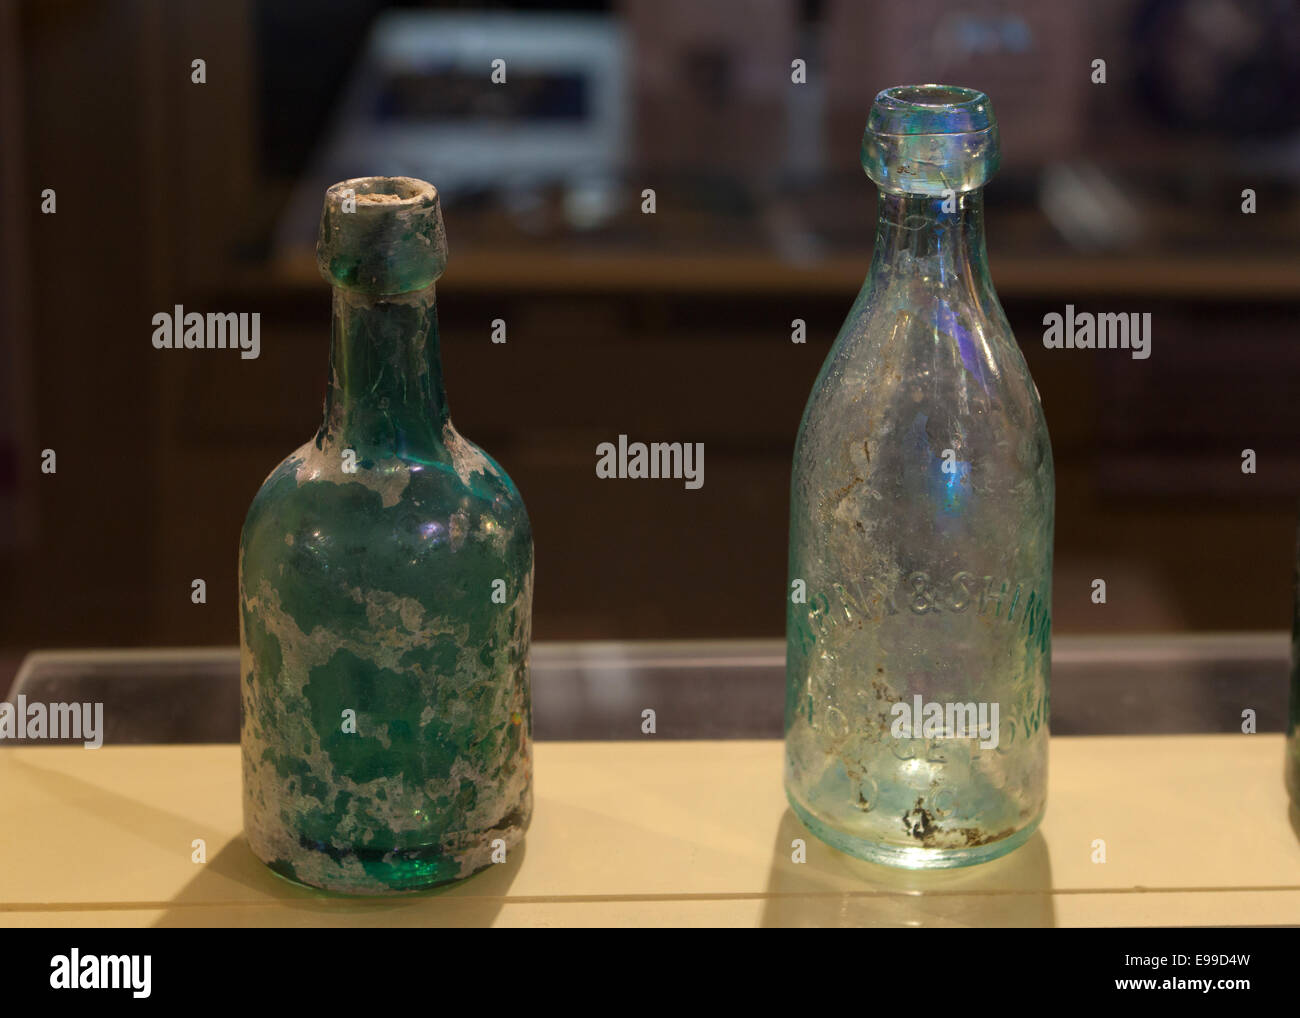 Vintage glass bottles - USA Stock Photo